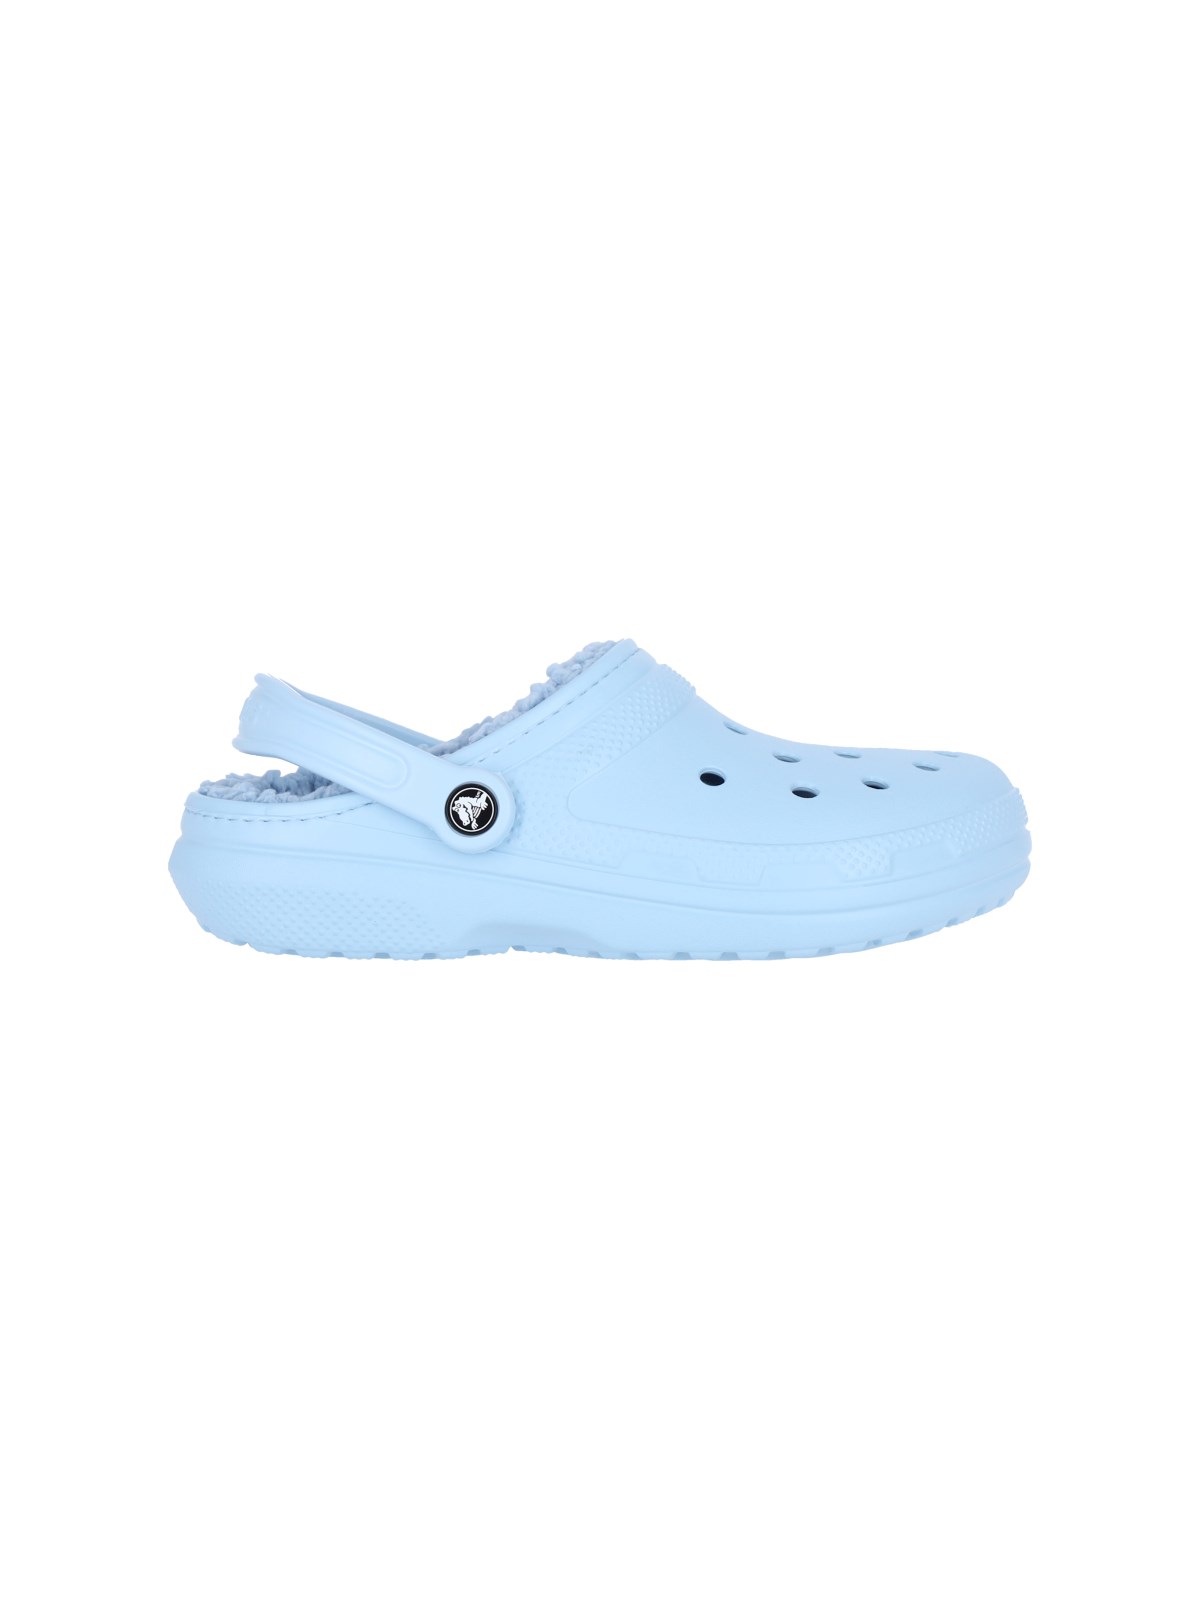 Crocs Lined Classic Clog Slipper In Light Blue